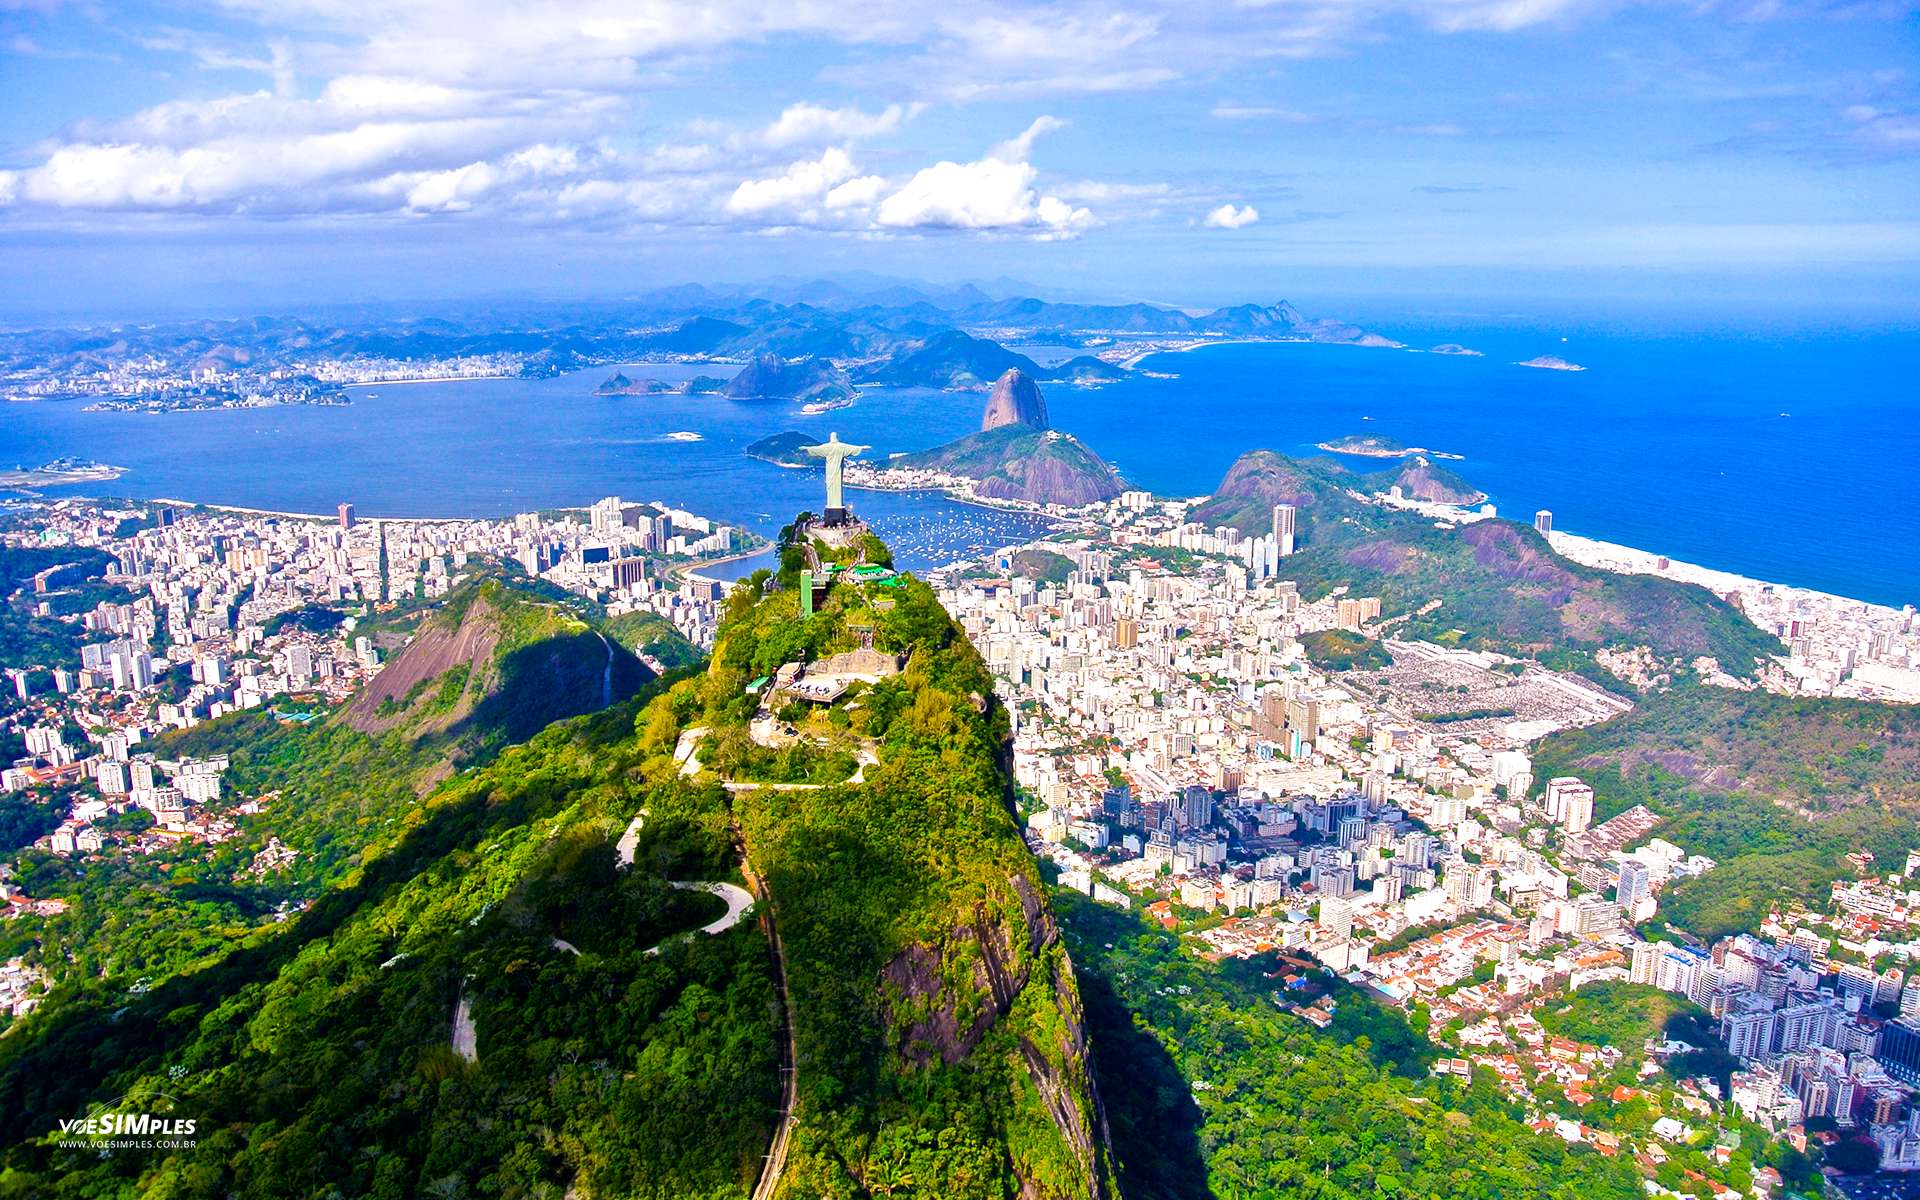 passagens-aereas-promocionais-latam-belo-horizonte-rio-janeiro-brasil-america-sul-voe-simples-promocoes-sdppart1